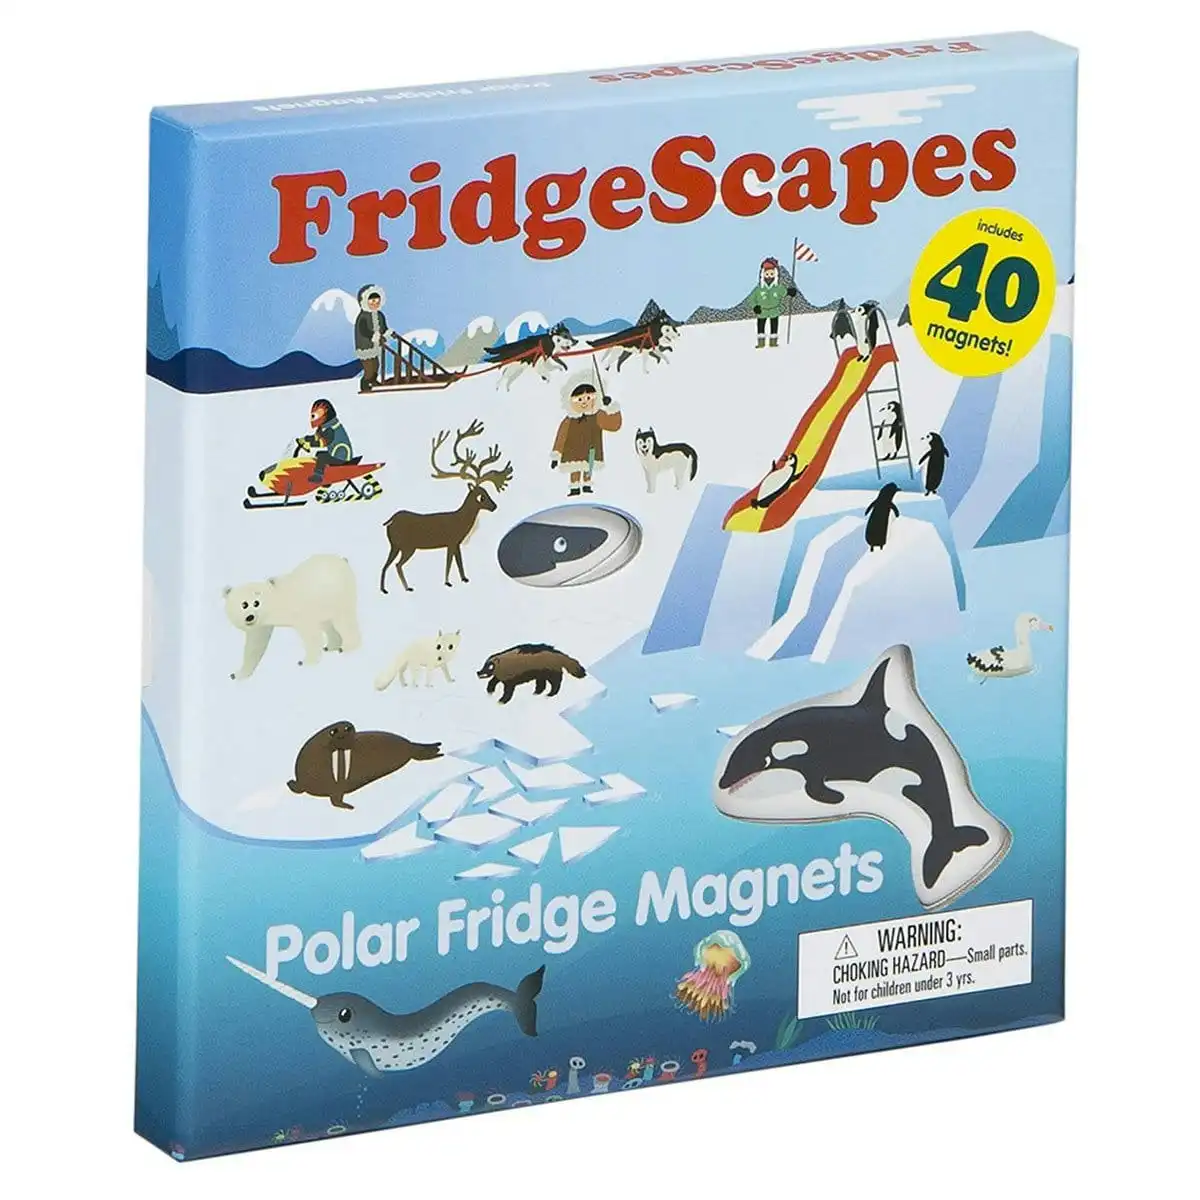 Promotional Fridgescapes: Polar Fridge Magnets